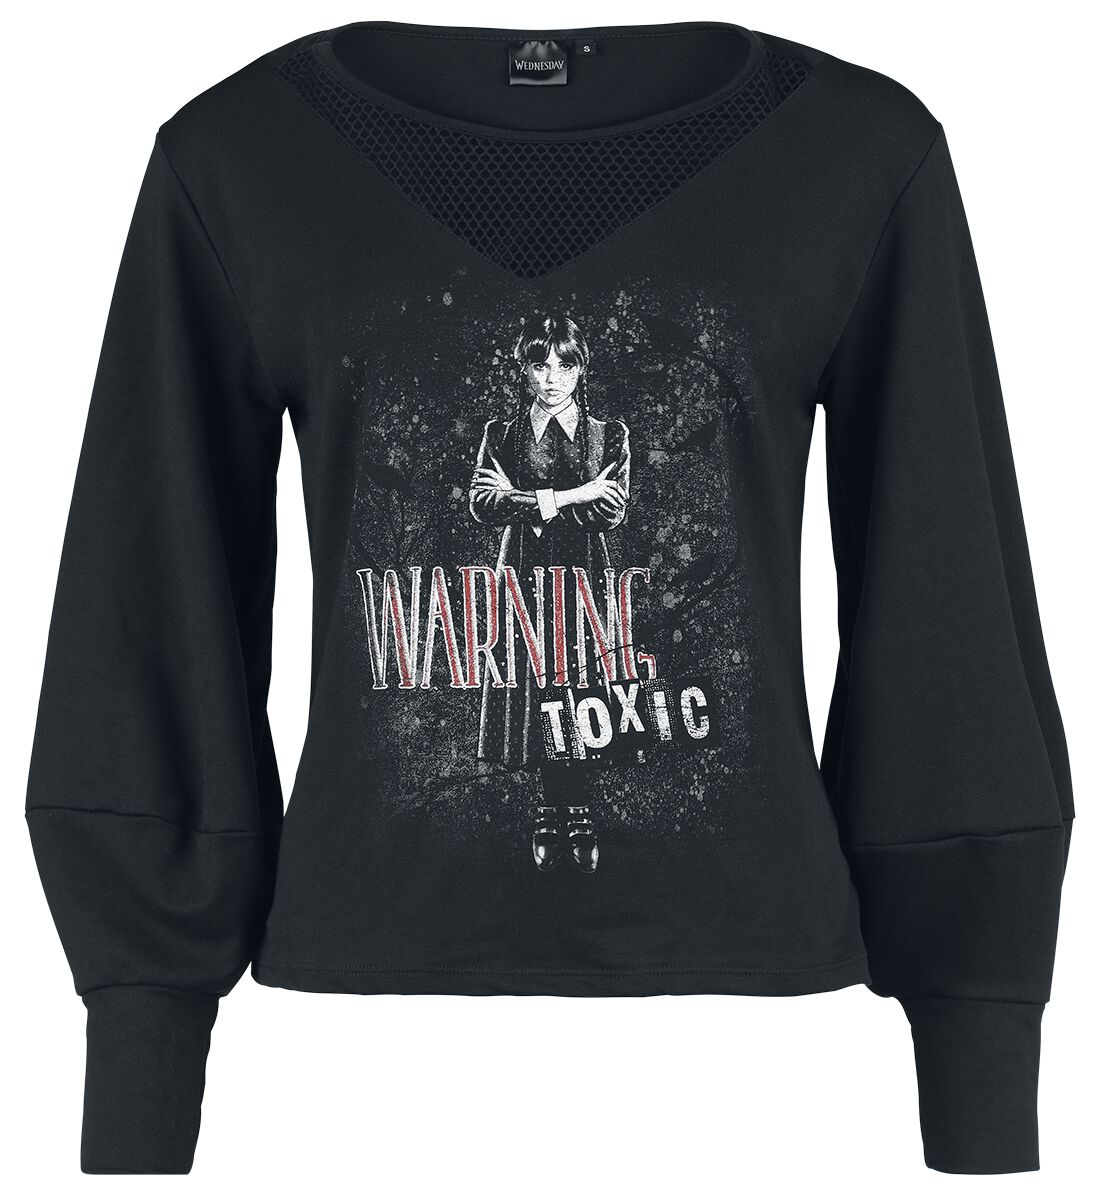 Wednesday Warning - Toxic Sweatshirt schwarz in XL